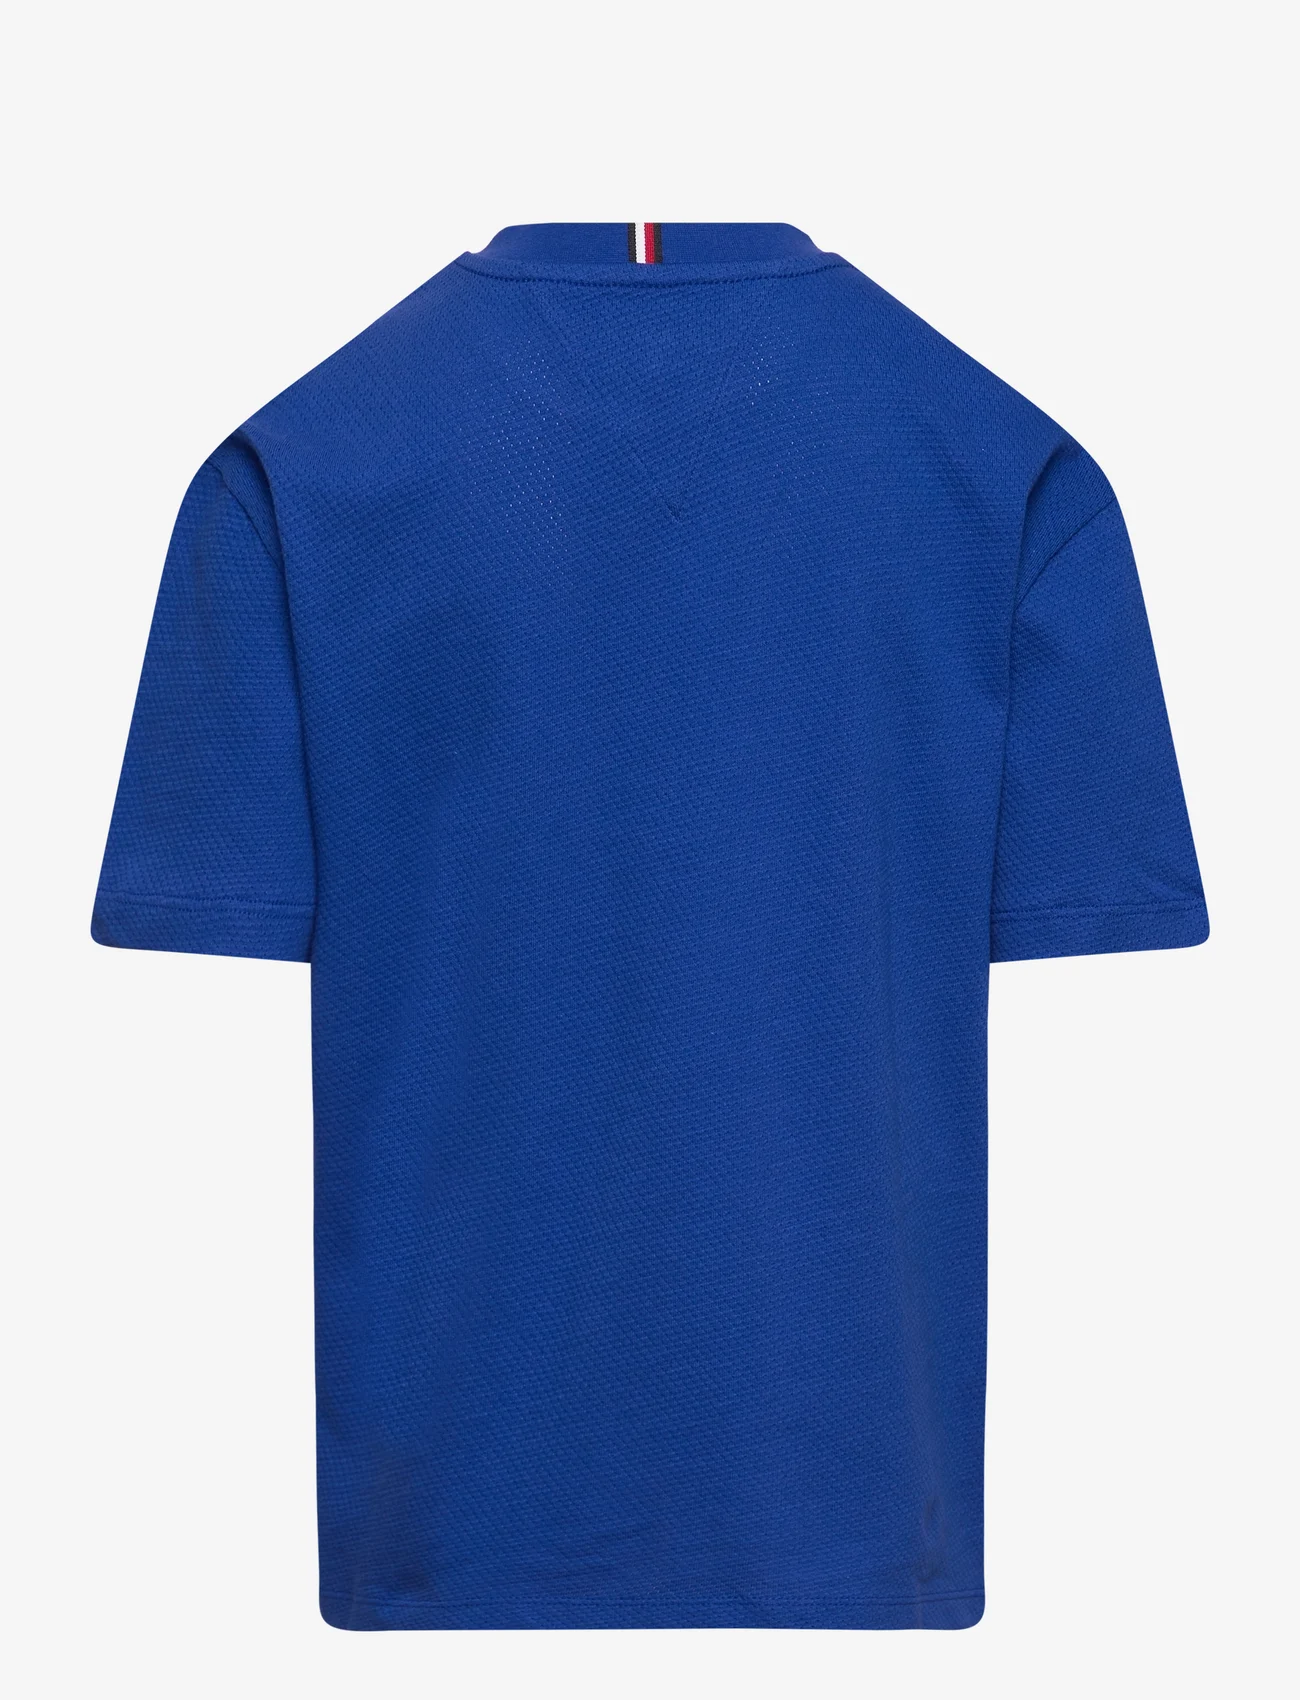 Tommy Hilfiger - MESH VARSITY TEE S/S - kortärmade t-shirts - ultra blue - 1